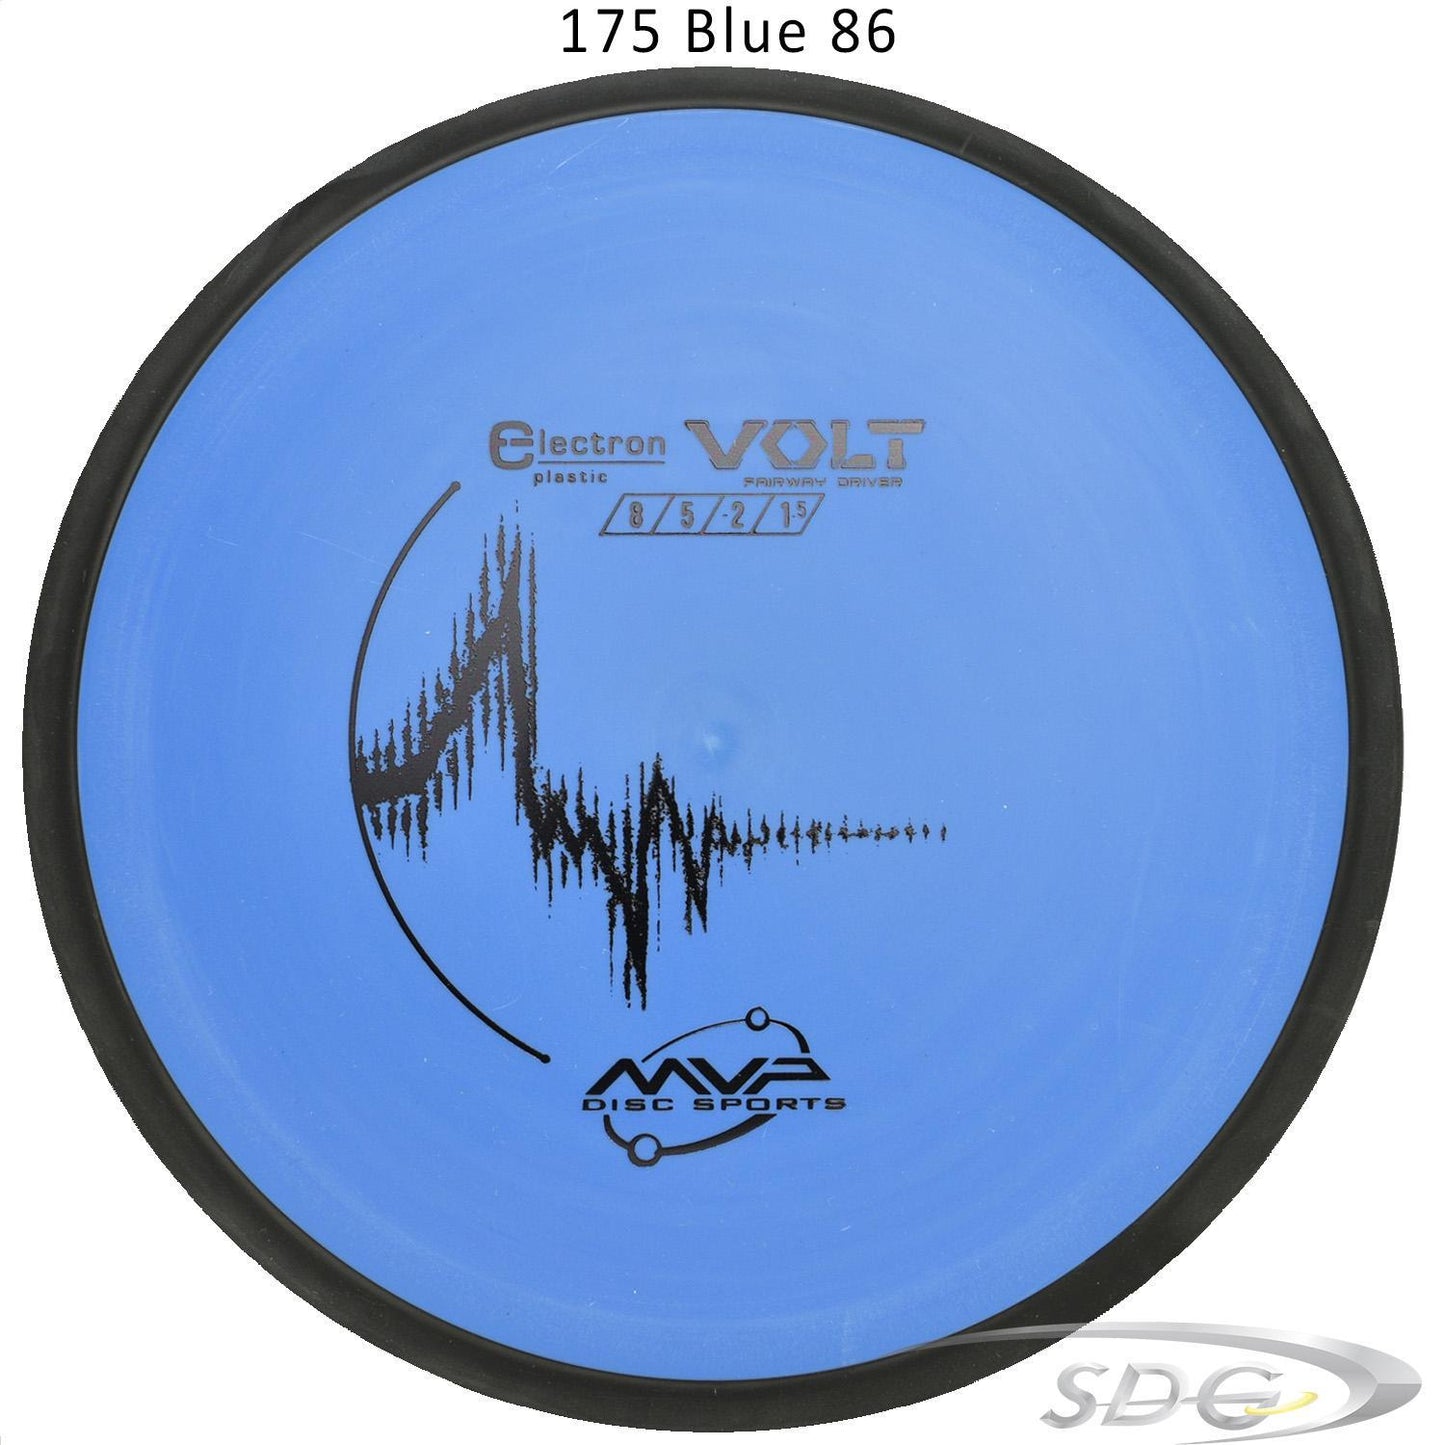 mvp-electron-volt-disc-golf-fairway-driver 175 Blue 86 